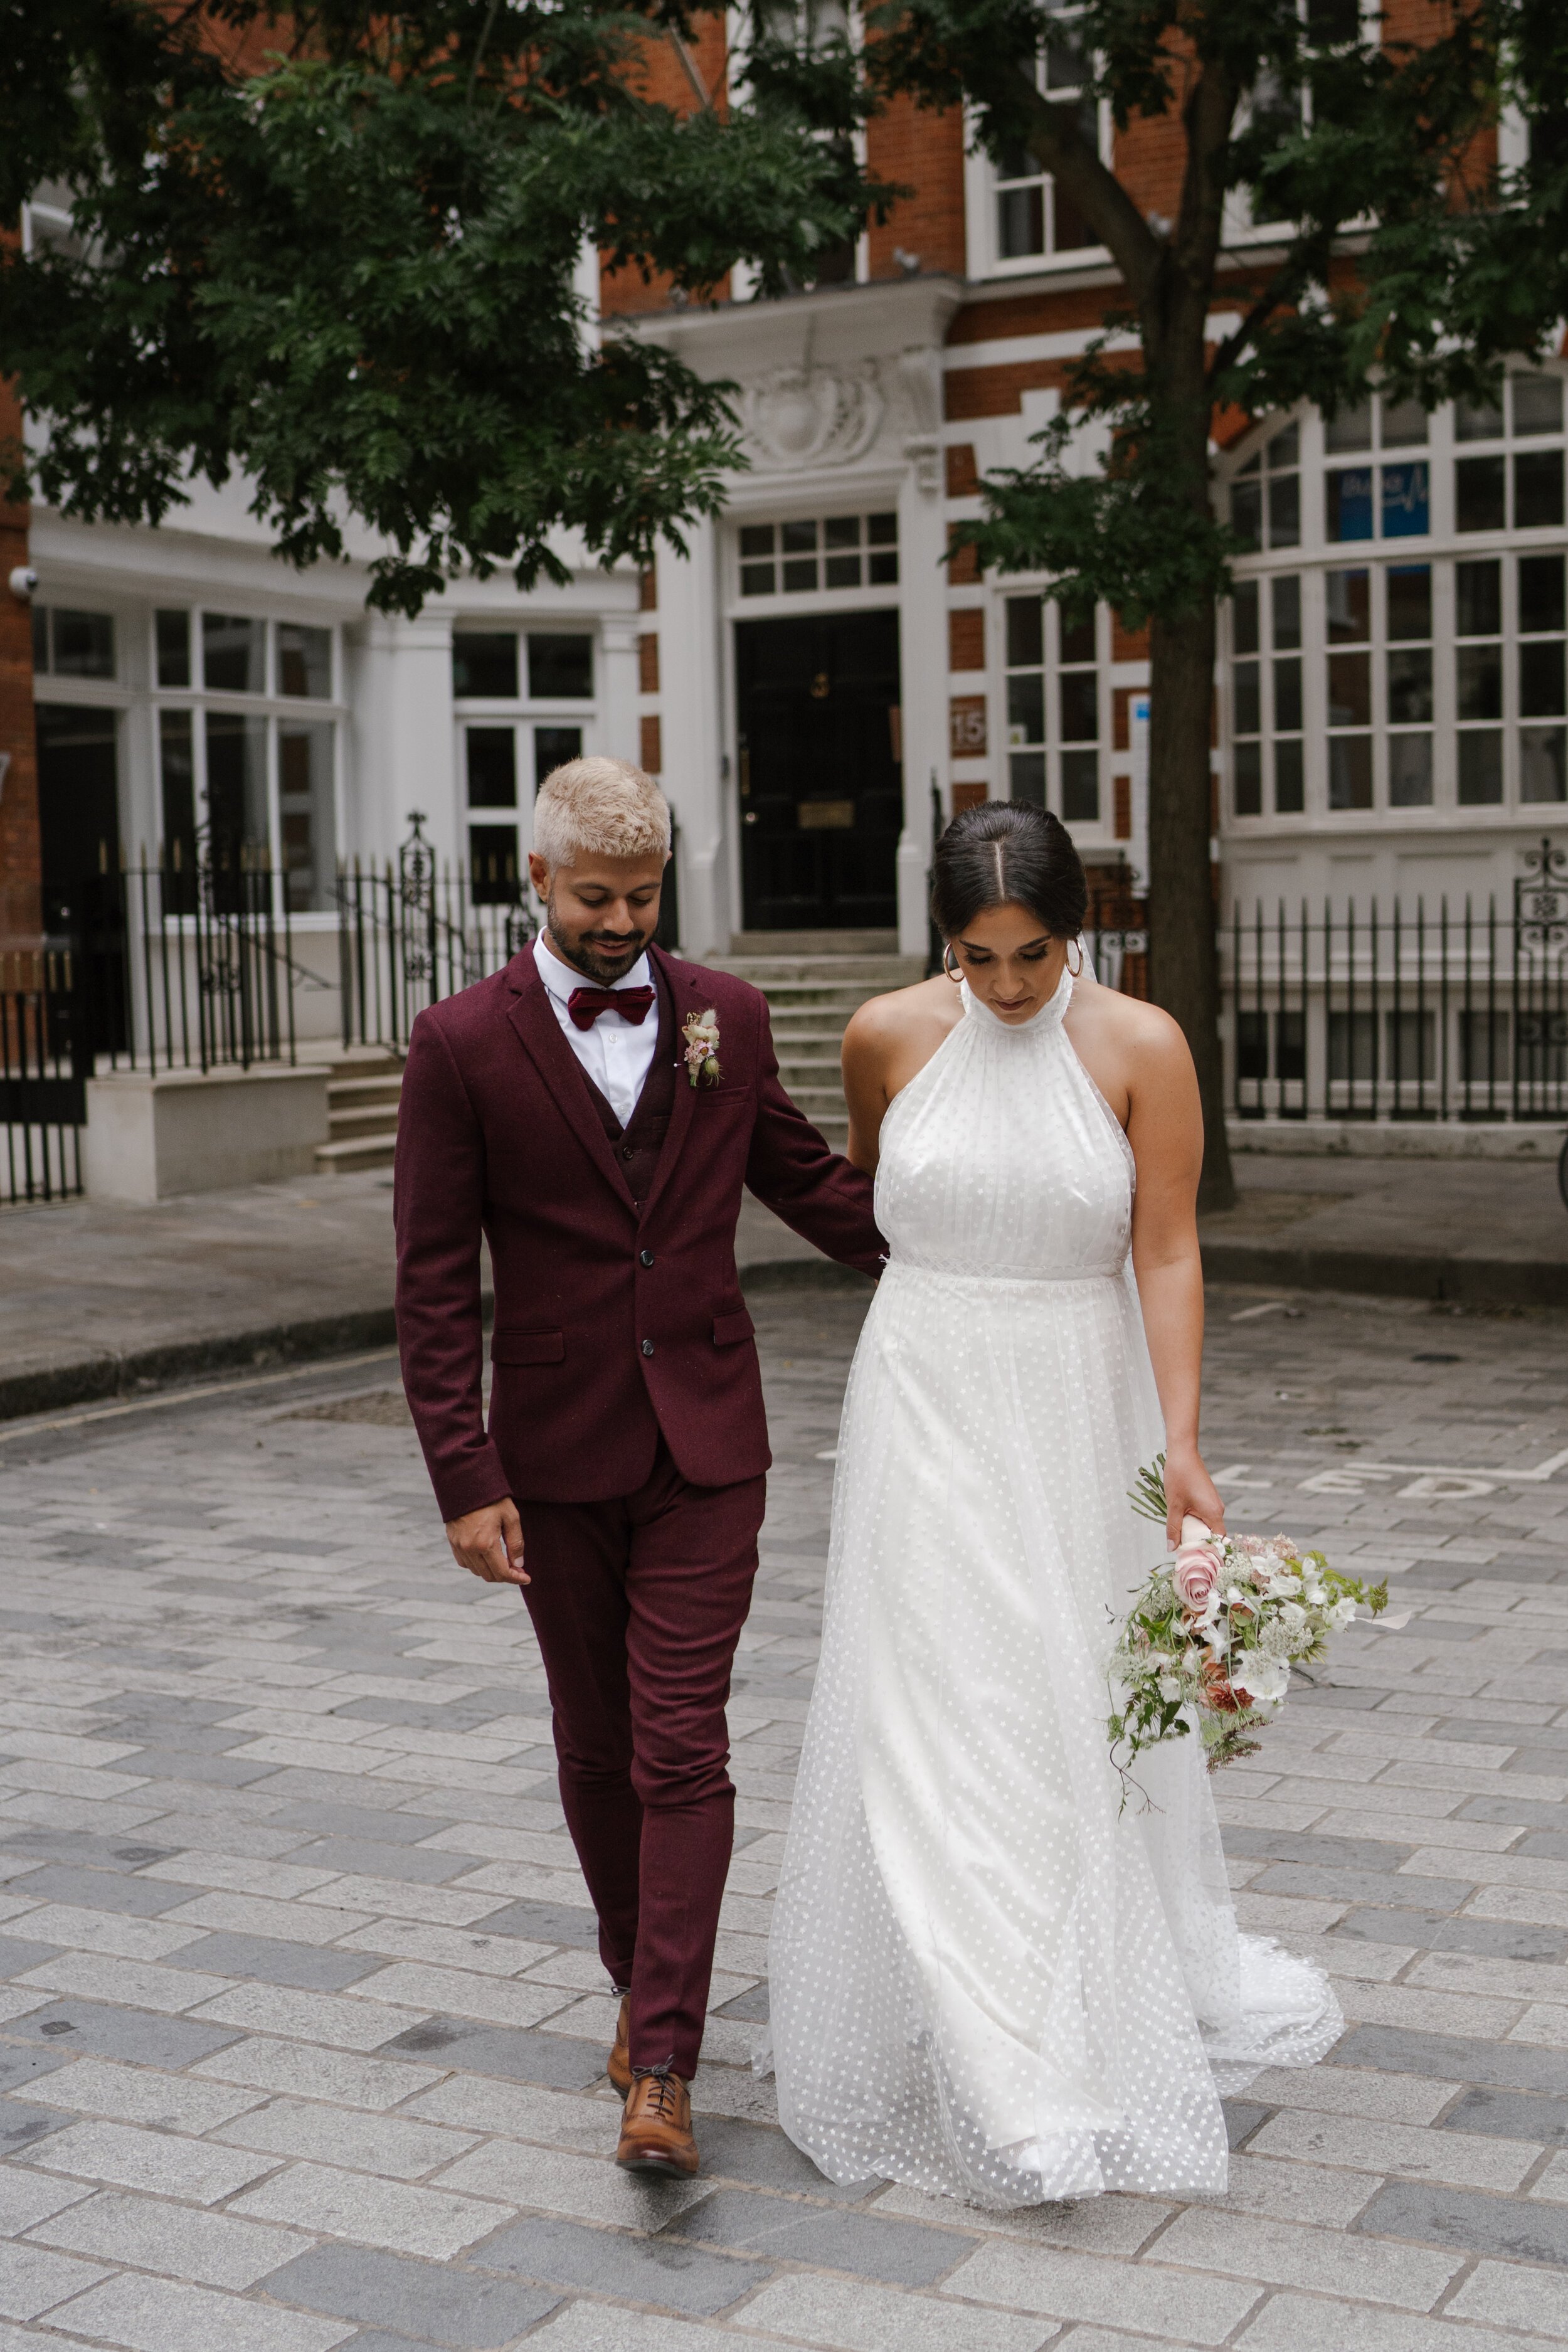 Beautiful bride Vanessa wore a wedding dress by Halfpenny London